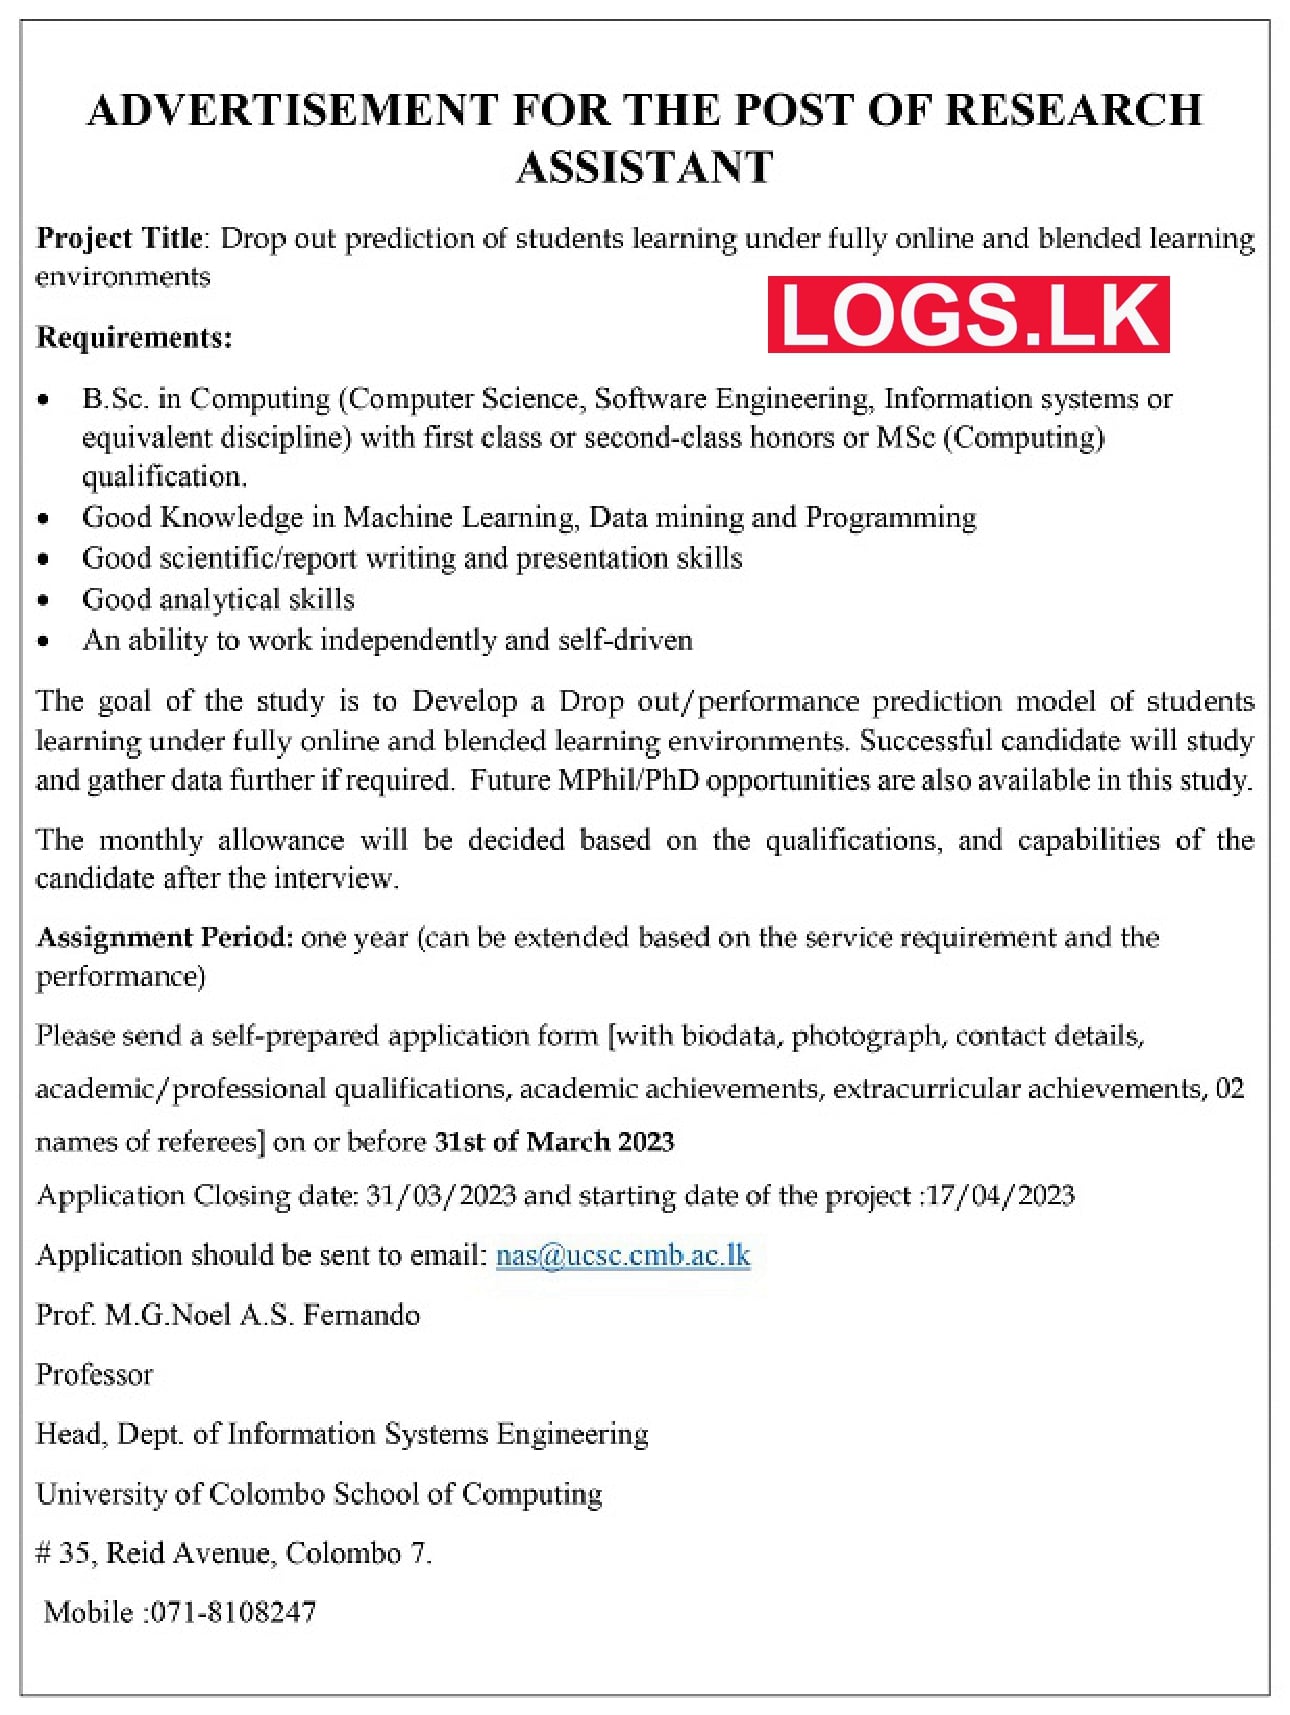 Research Assistant Vacancies - University of Colombo Vacancies 2023 Application